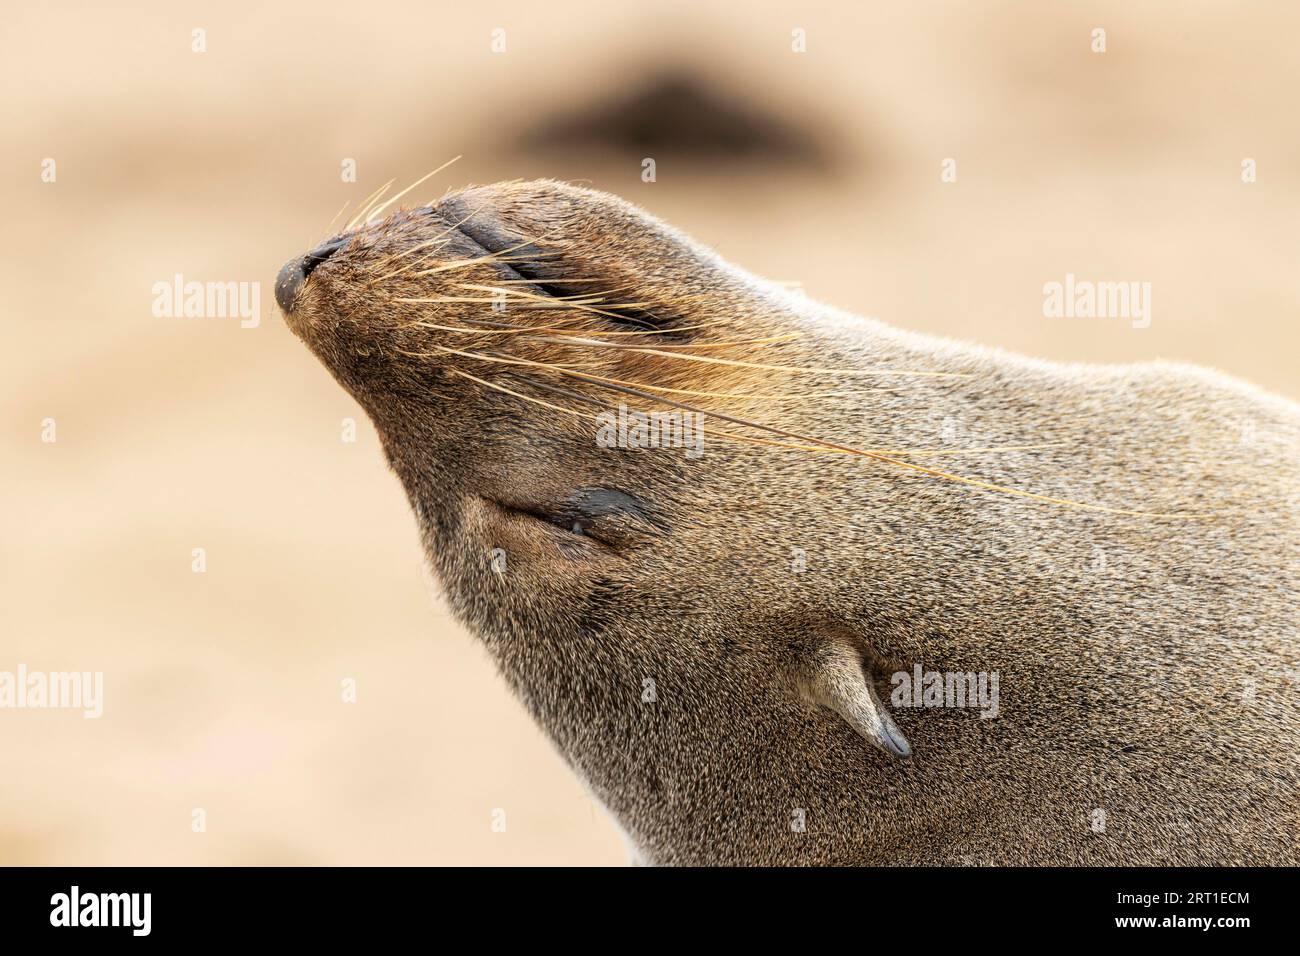 Cape Fur Seal (Arctocephalus pusillus) . Resting. Cape Cross Seal Reserve, Skeleton Coast, Dorob National Park, Namibia Stock Photo